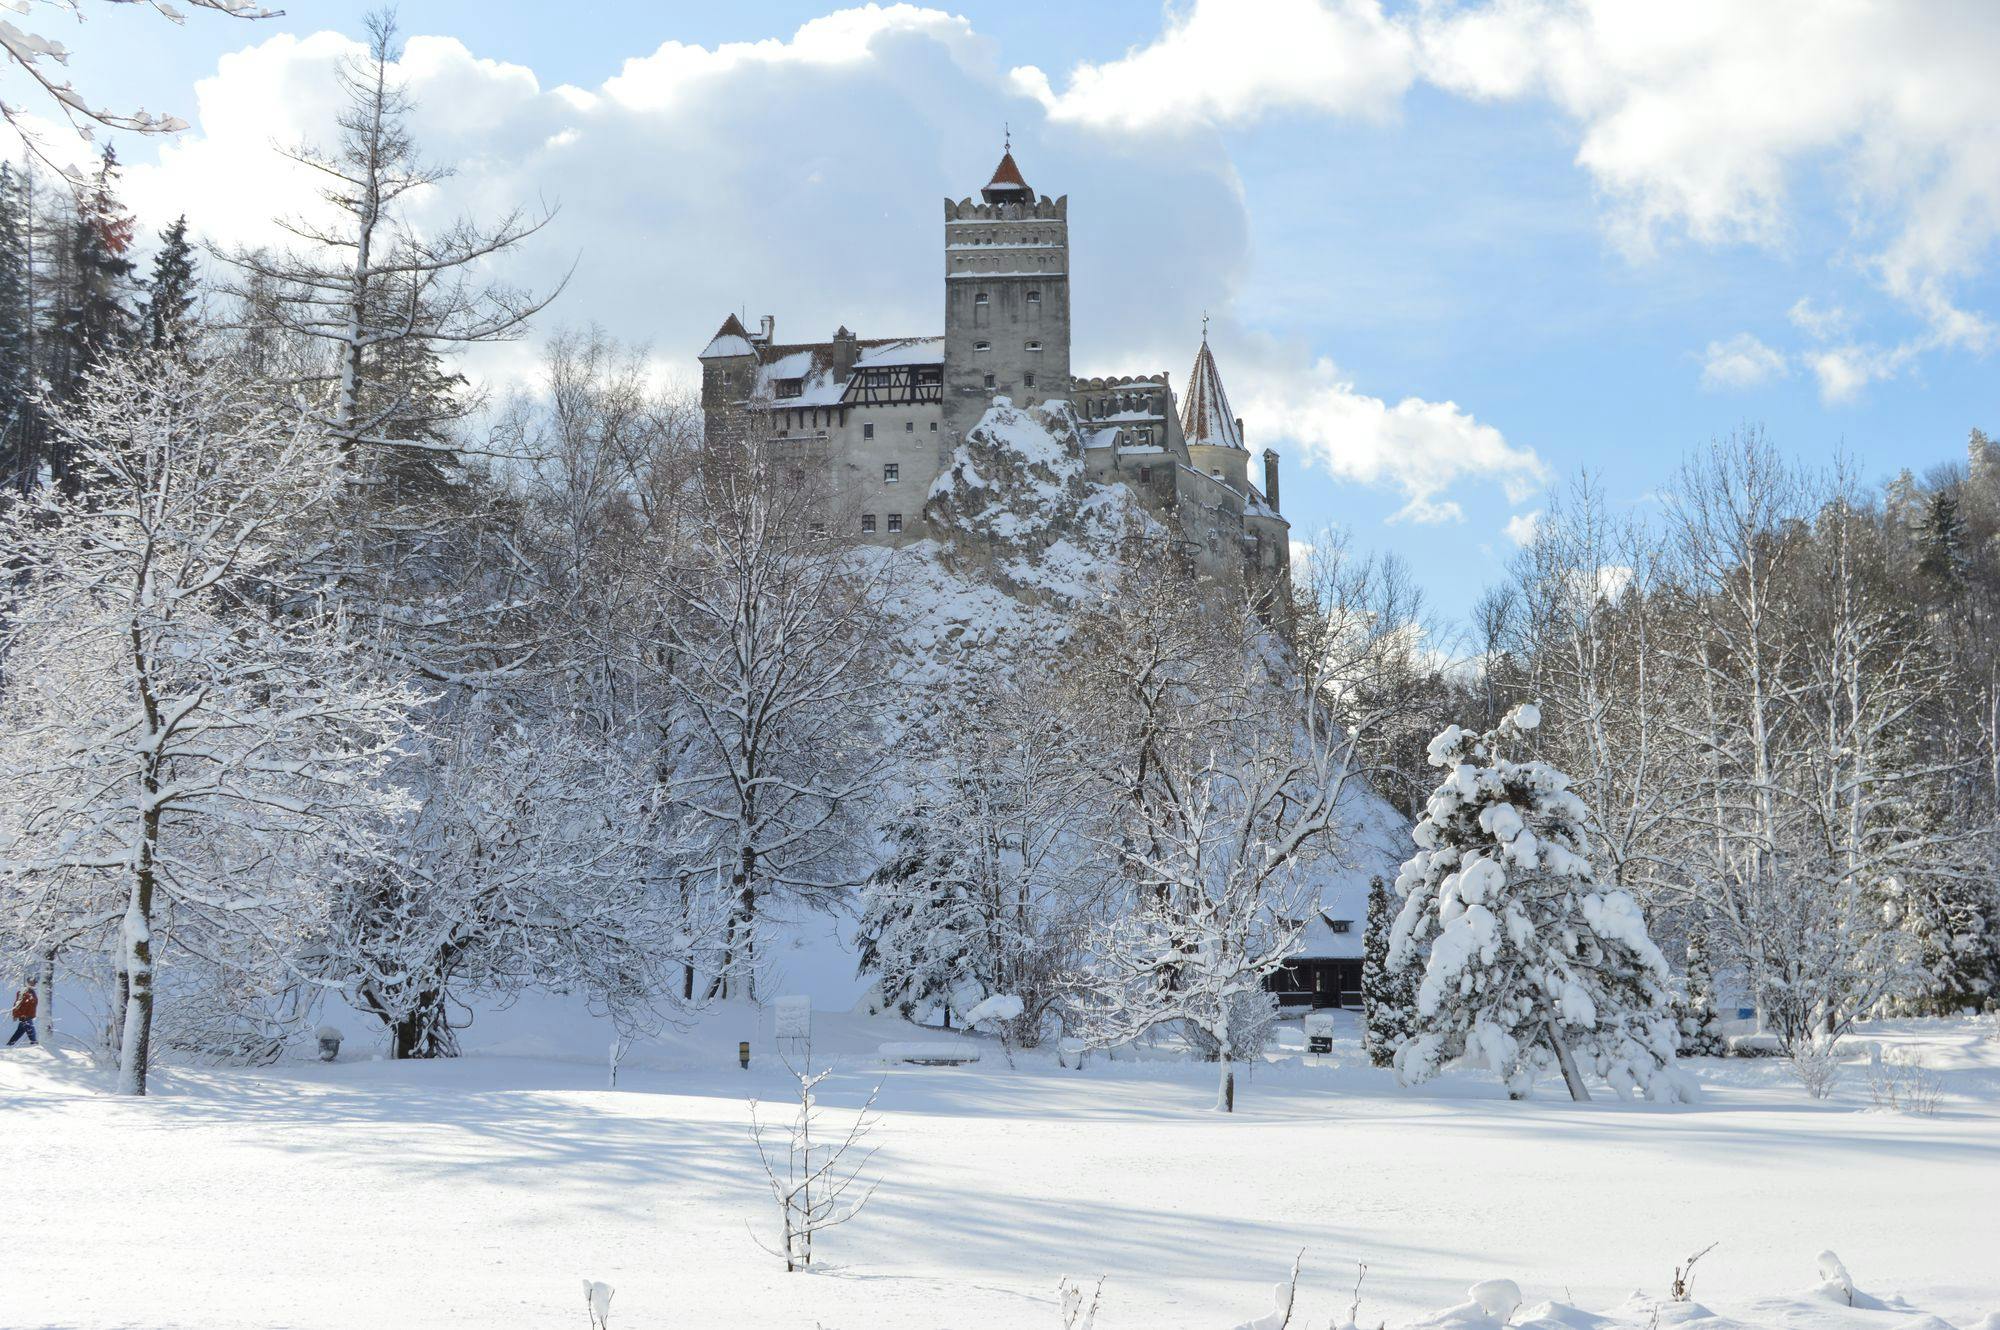 Transylvania Winter Adventure - Snowshoeing, Husky Sledding, and Sightseeing